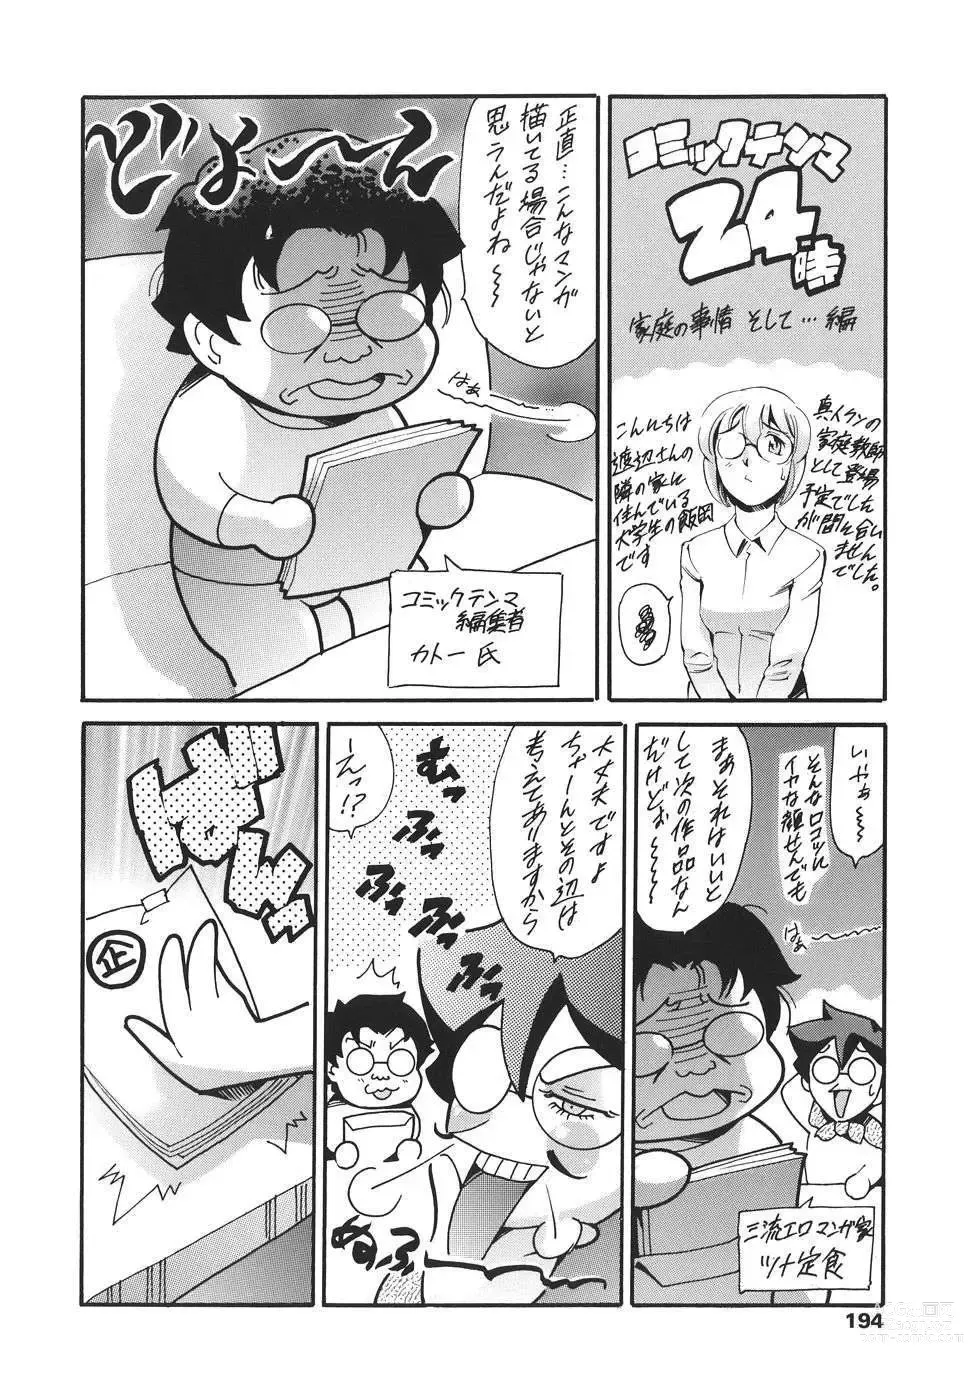 Page 194 of manga Katei no Jijou - Familys circumstances